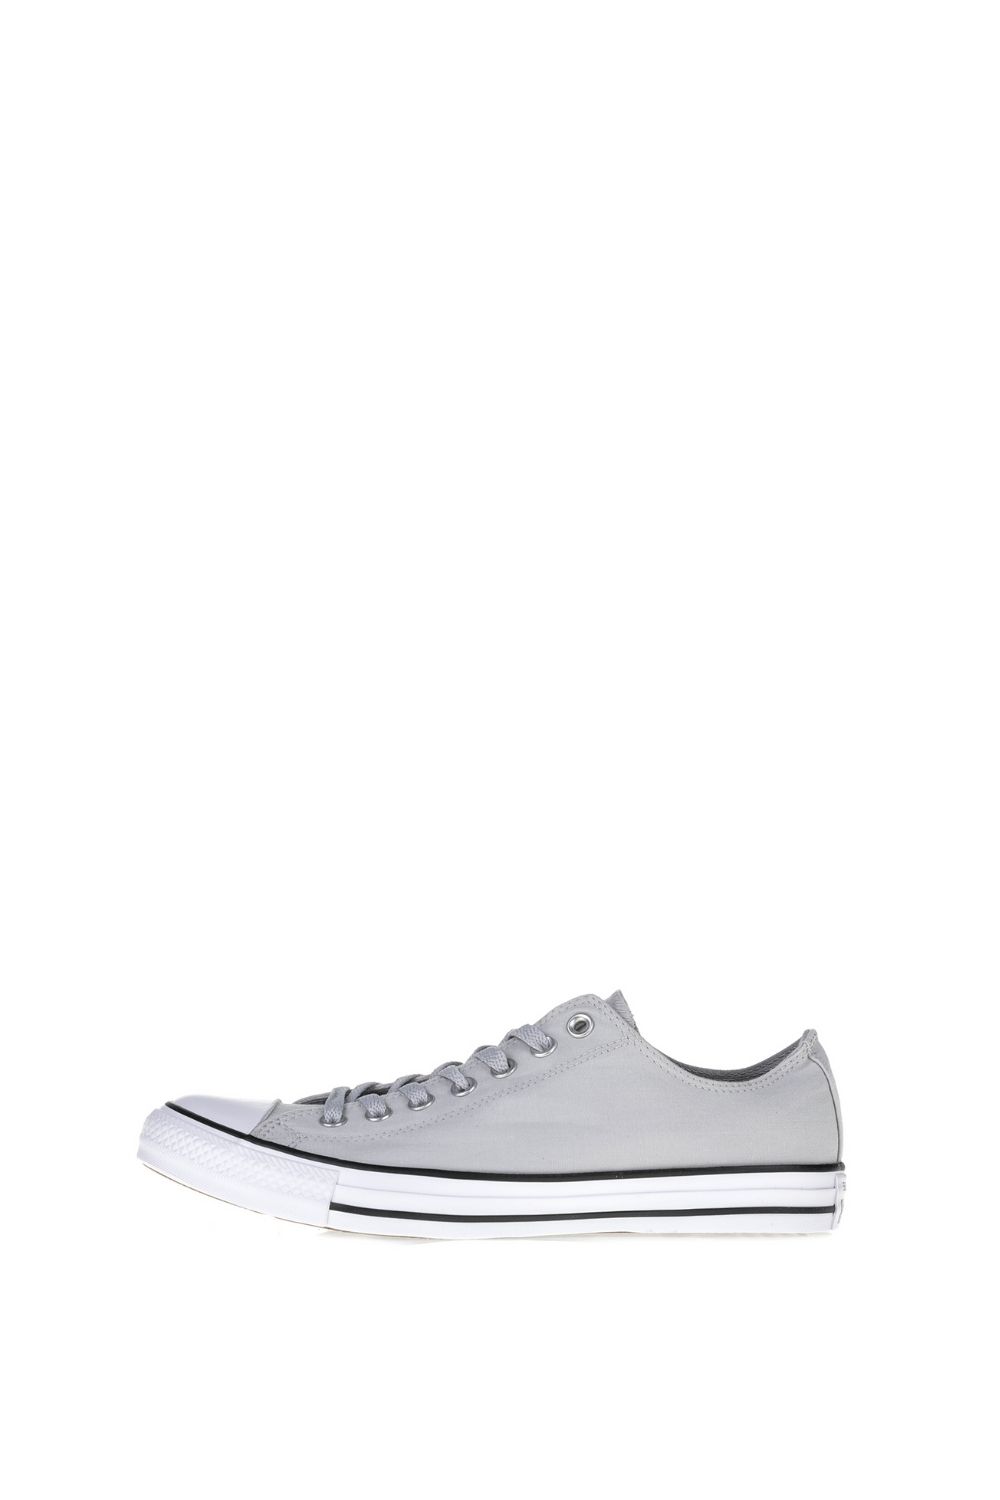 CONVERSE - Unisex παπούτσια Chuck Taylor All Star Ox γκρι Ανδρικά/Παπούτσια/Sneakers